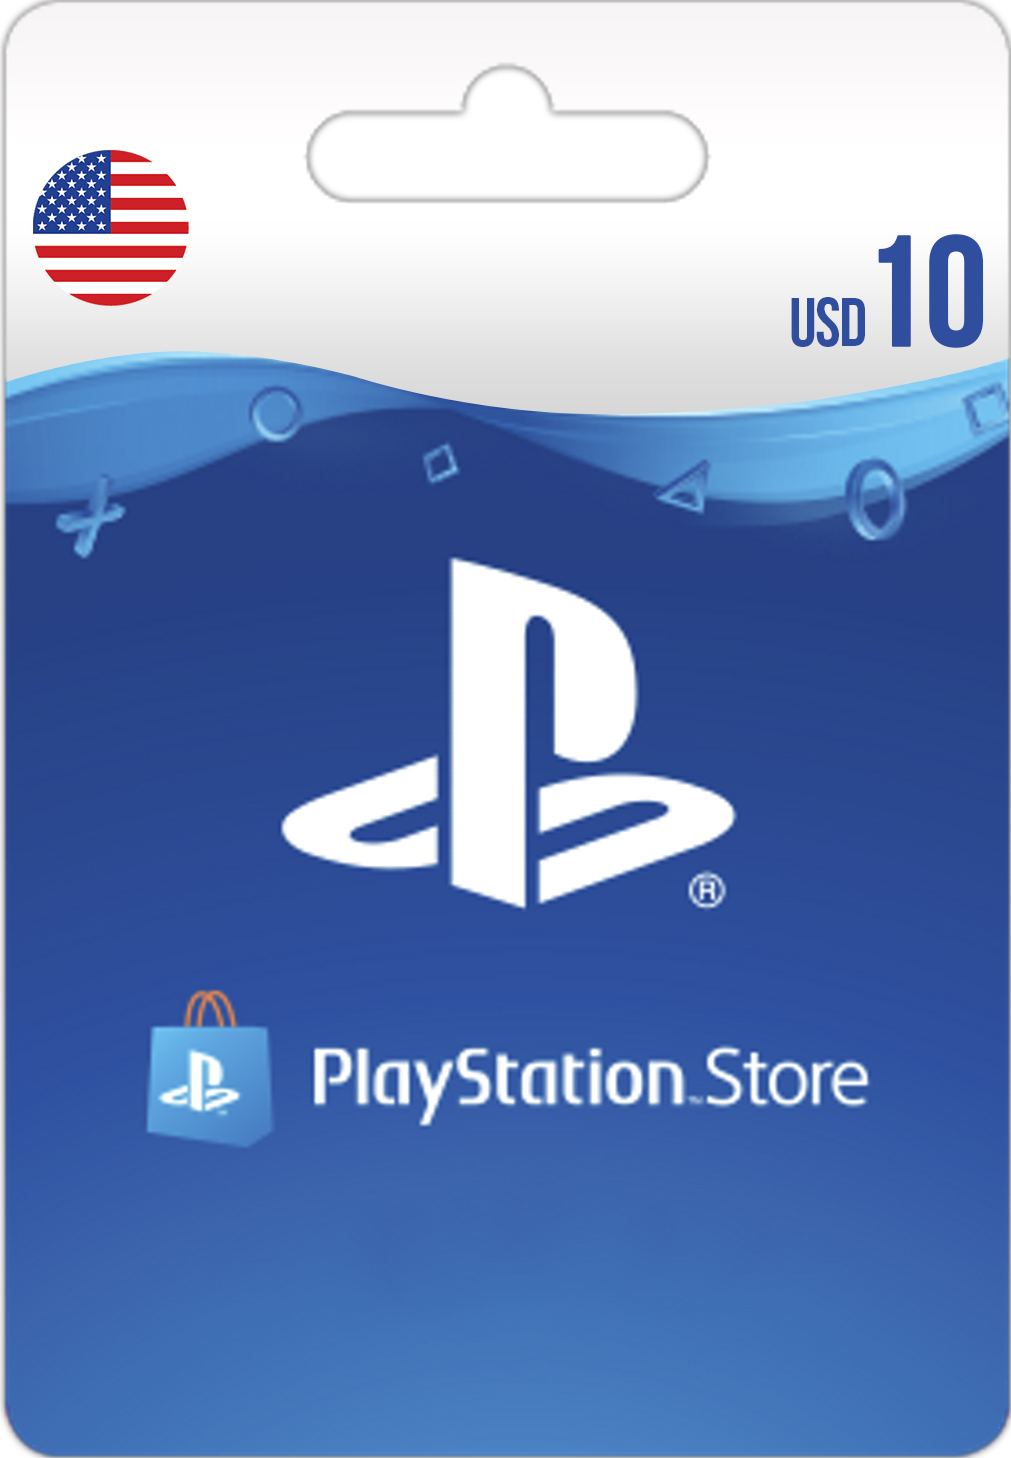 Card 10 USD | Playstation US digital for PSP, PS3, PS Vita, PS4, PS5